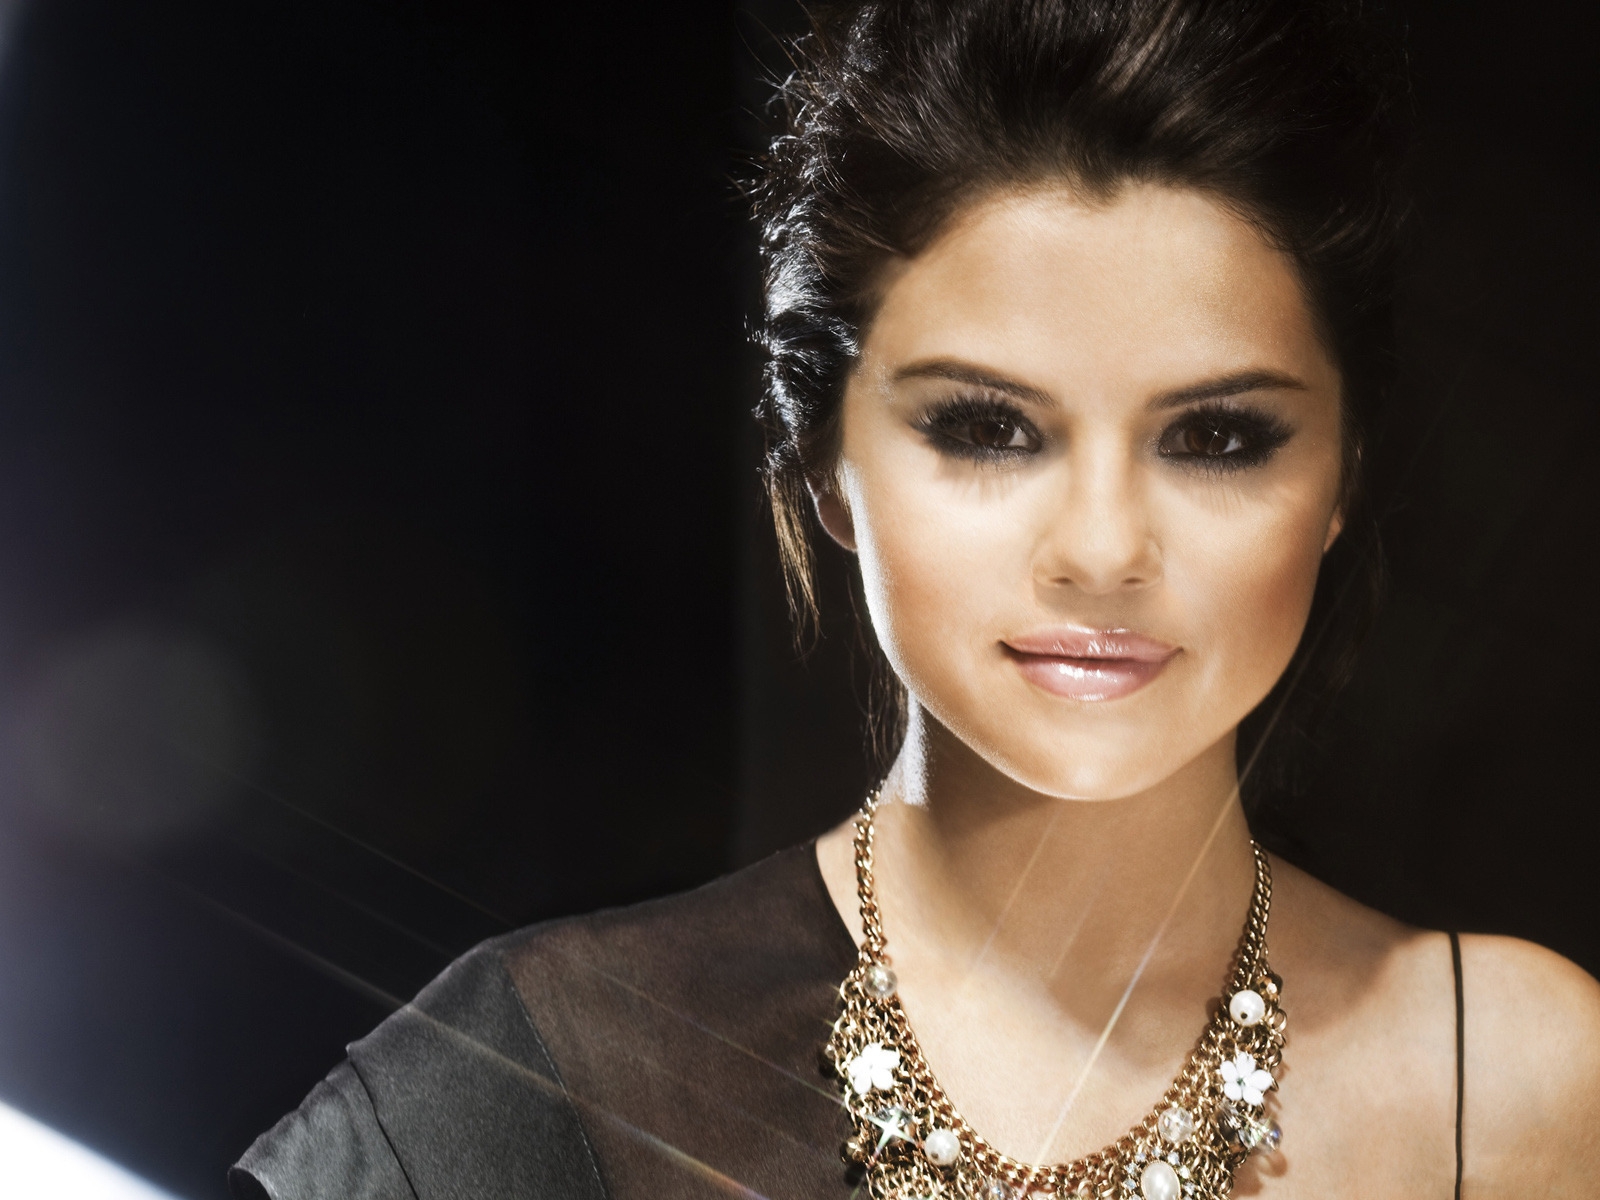 Beautiful Selena Gomez for 1600 x 1200 resolution